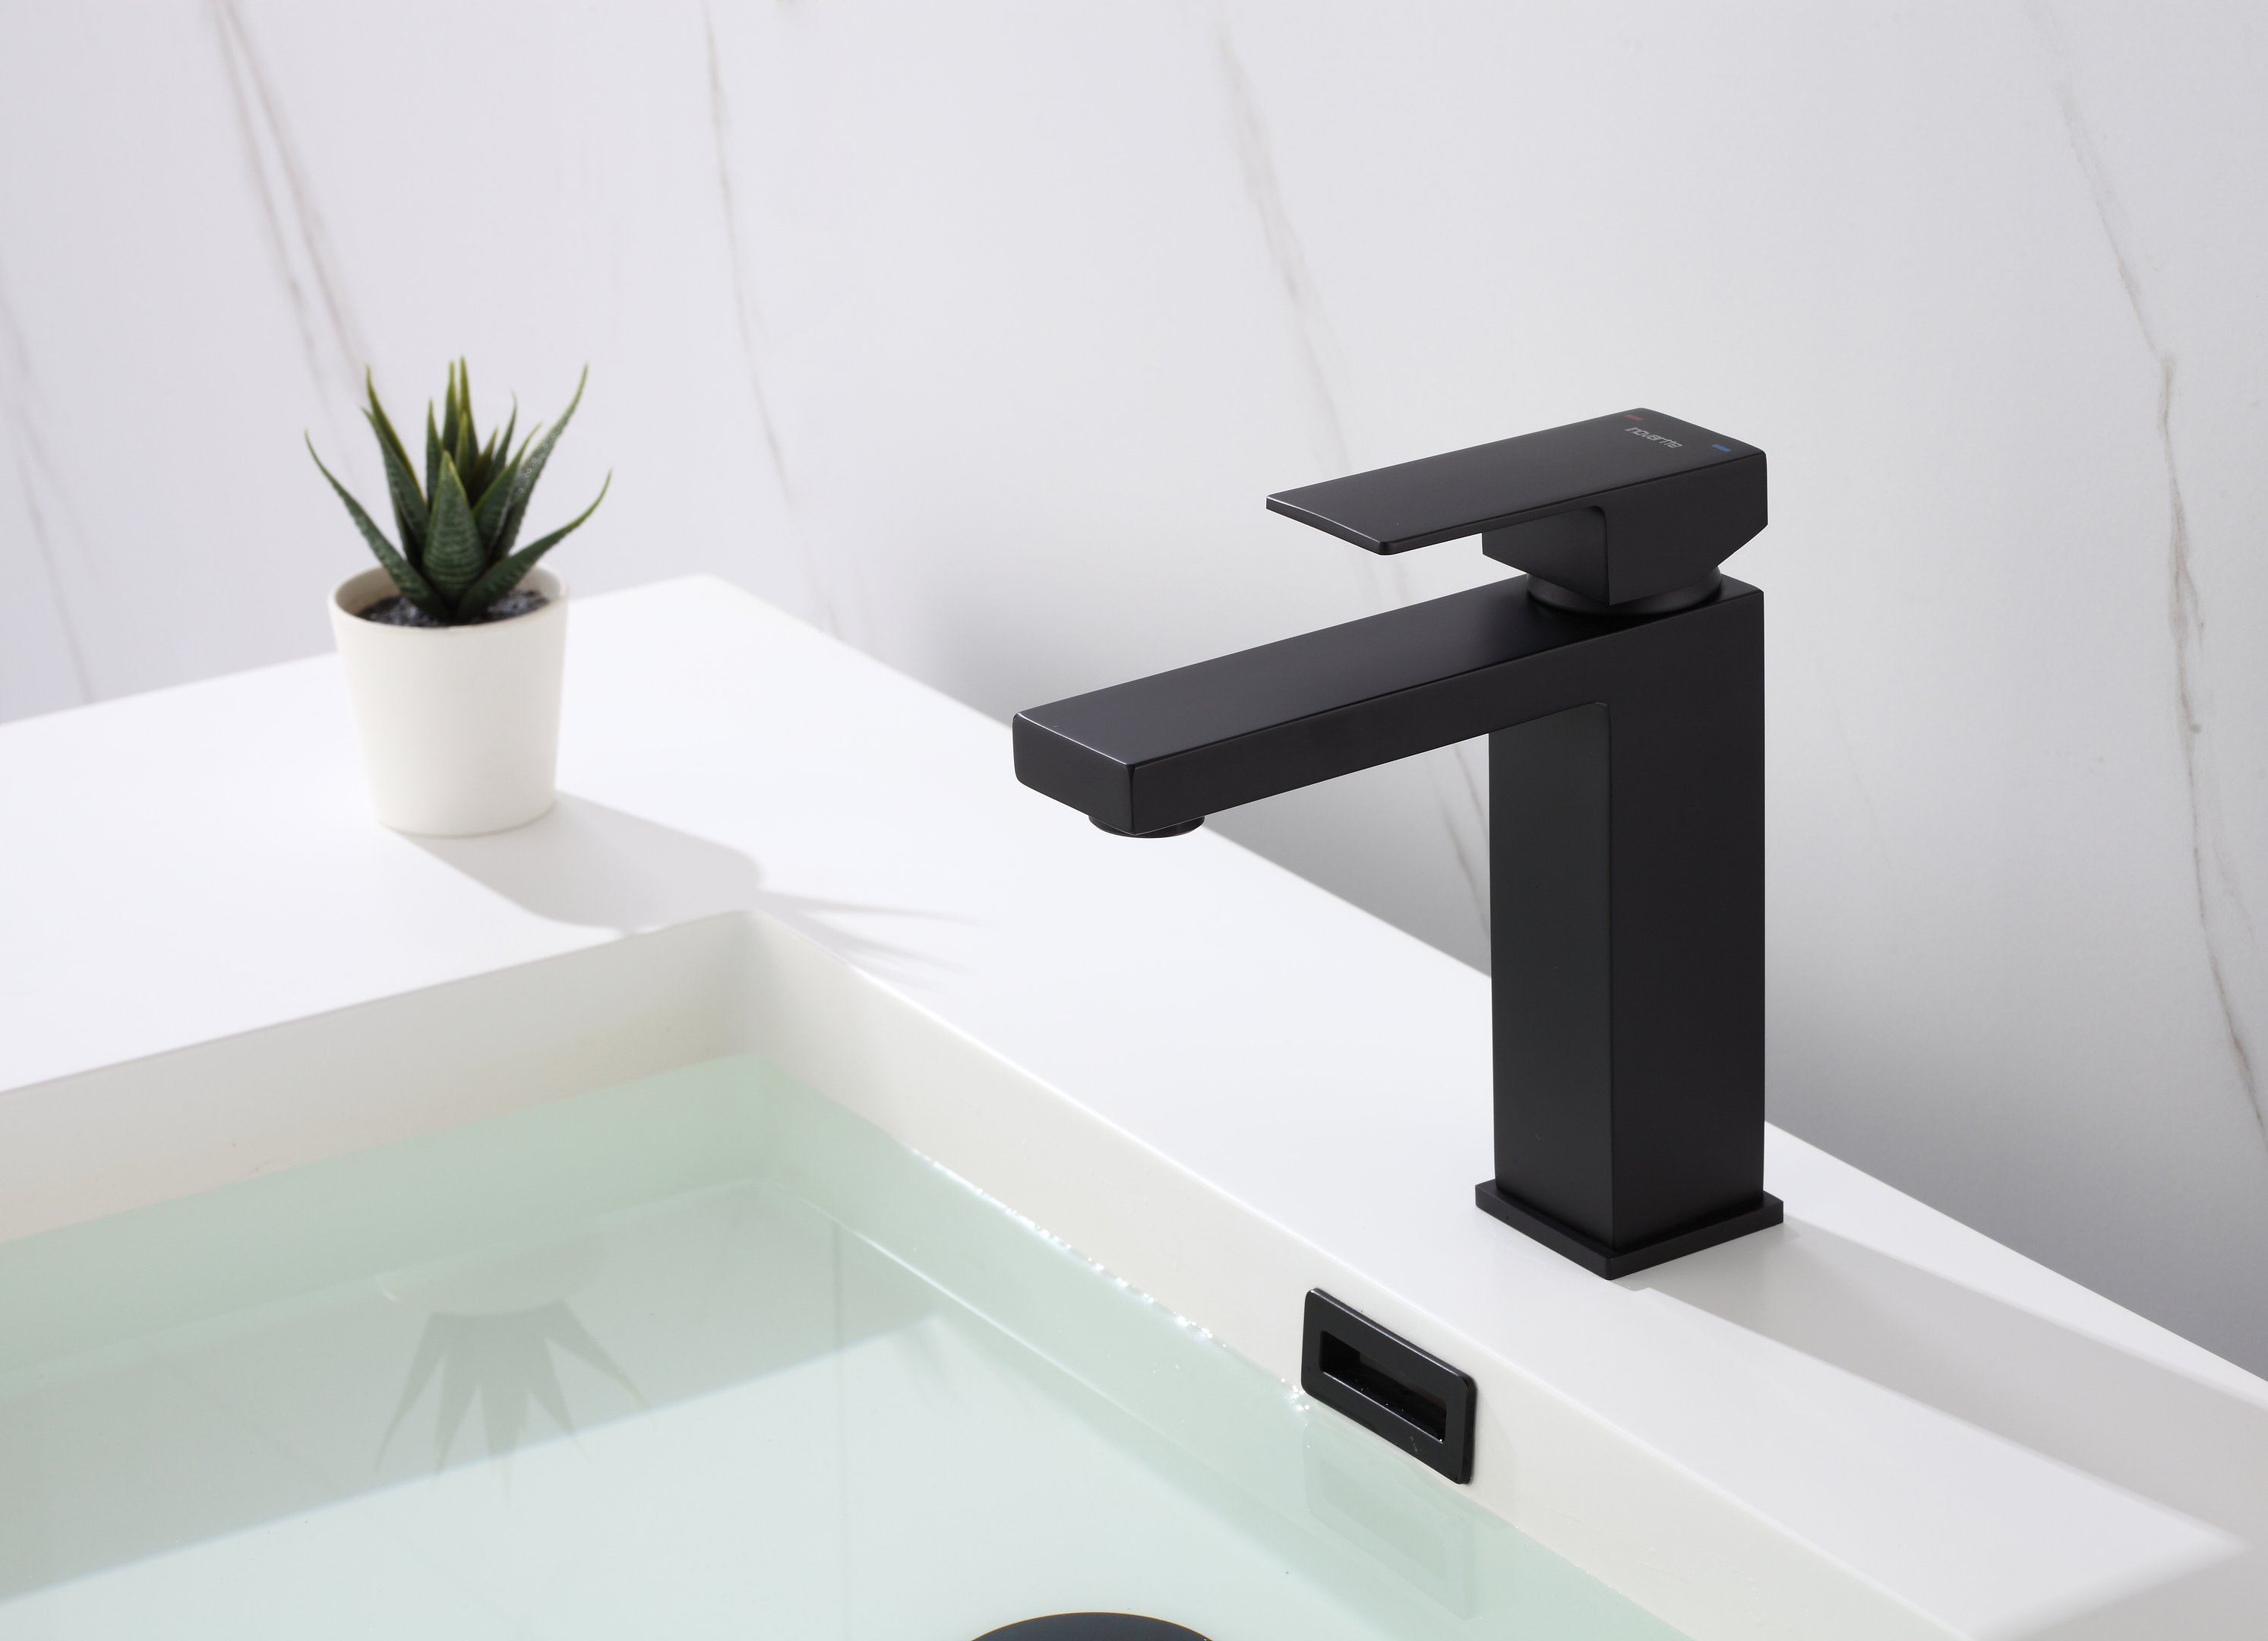 Torneira Monocomando Preto Quadrada Banheiro Lavabo Bica Baixa Luxo Inovartte In24 - 6